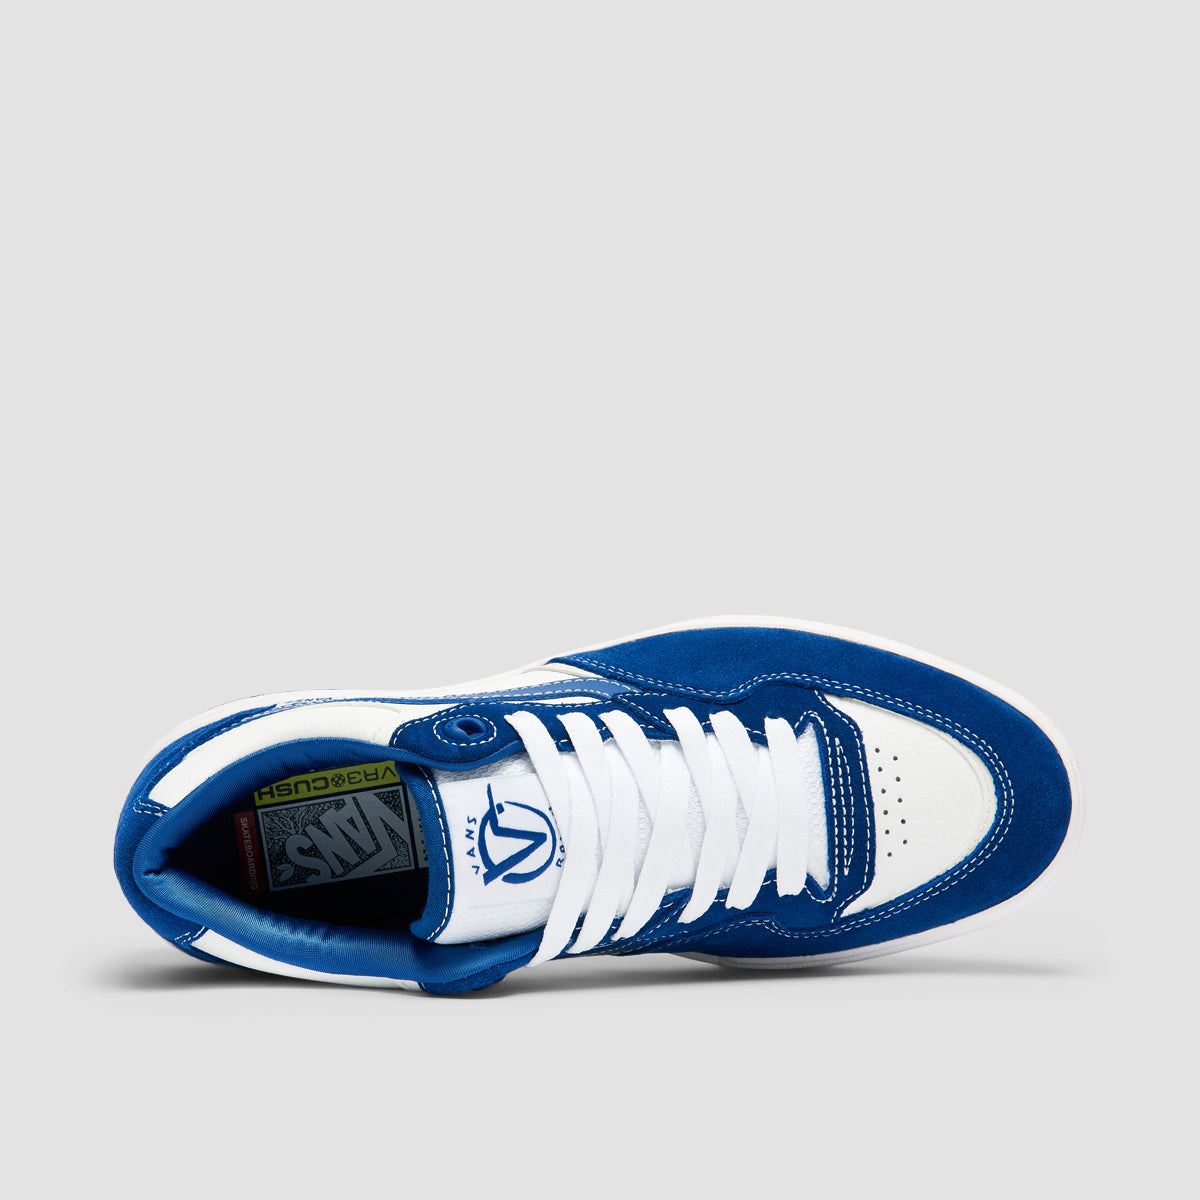 Vans Rowan 2 Shoes - True Blue/White